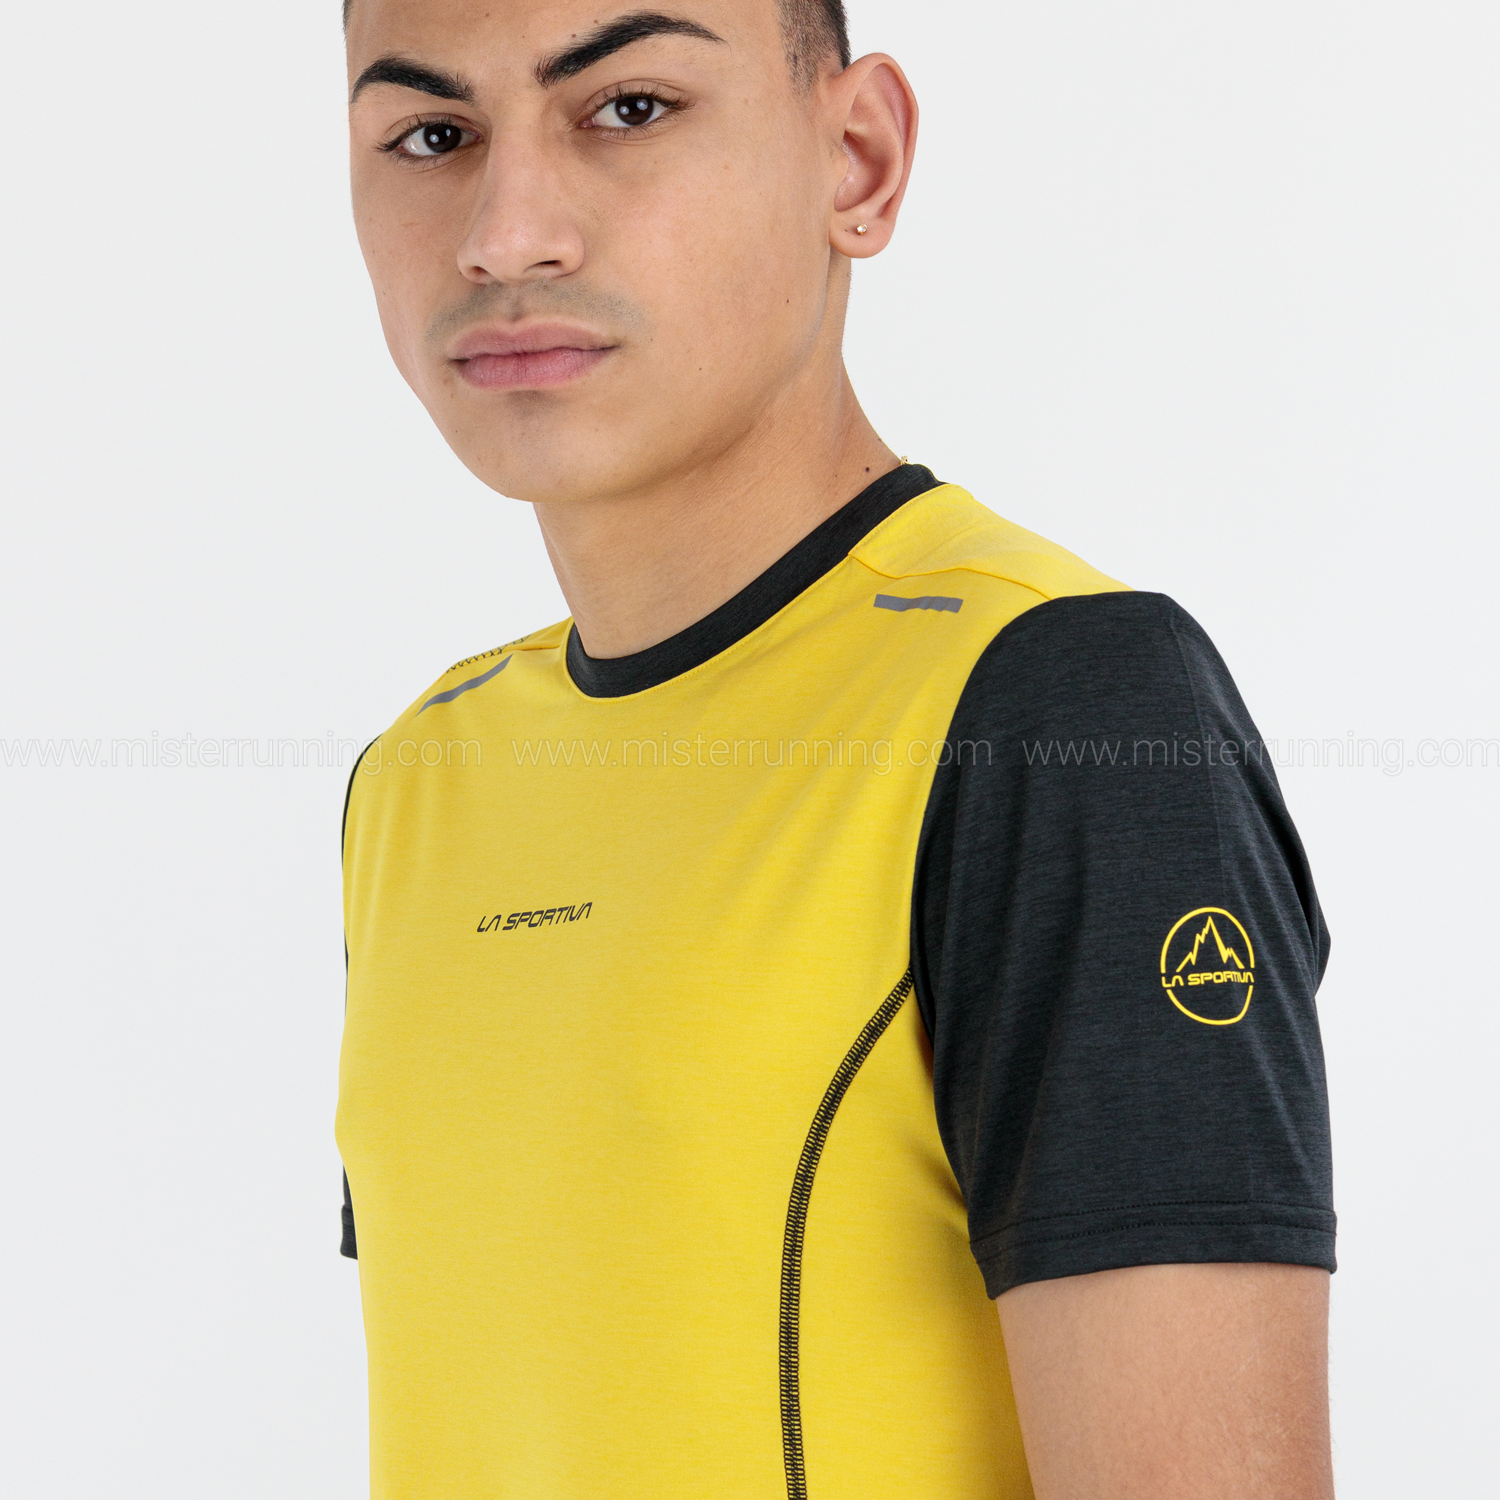 La Sportiva Tracer Camiseta - Yellow/Black